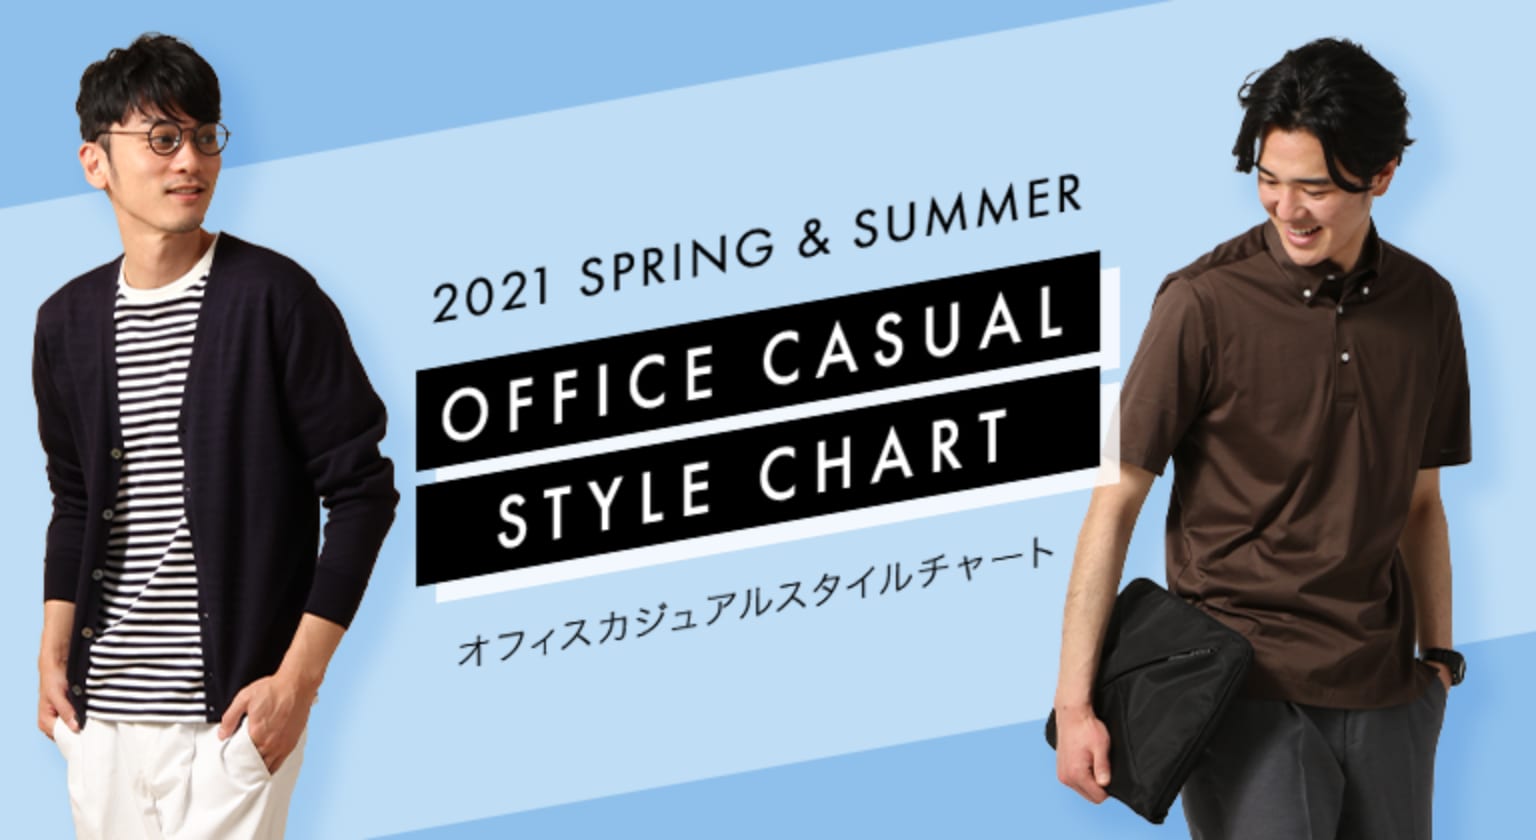 2021 SPRING & SUMMER OFFICE CASUAL STYLE CHART オフィスカジュアルスタイルチャート